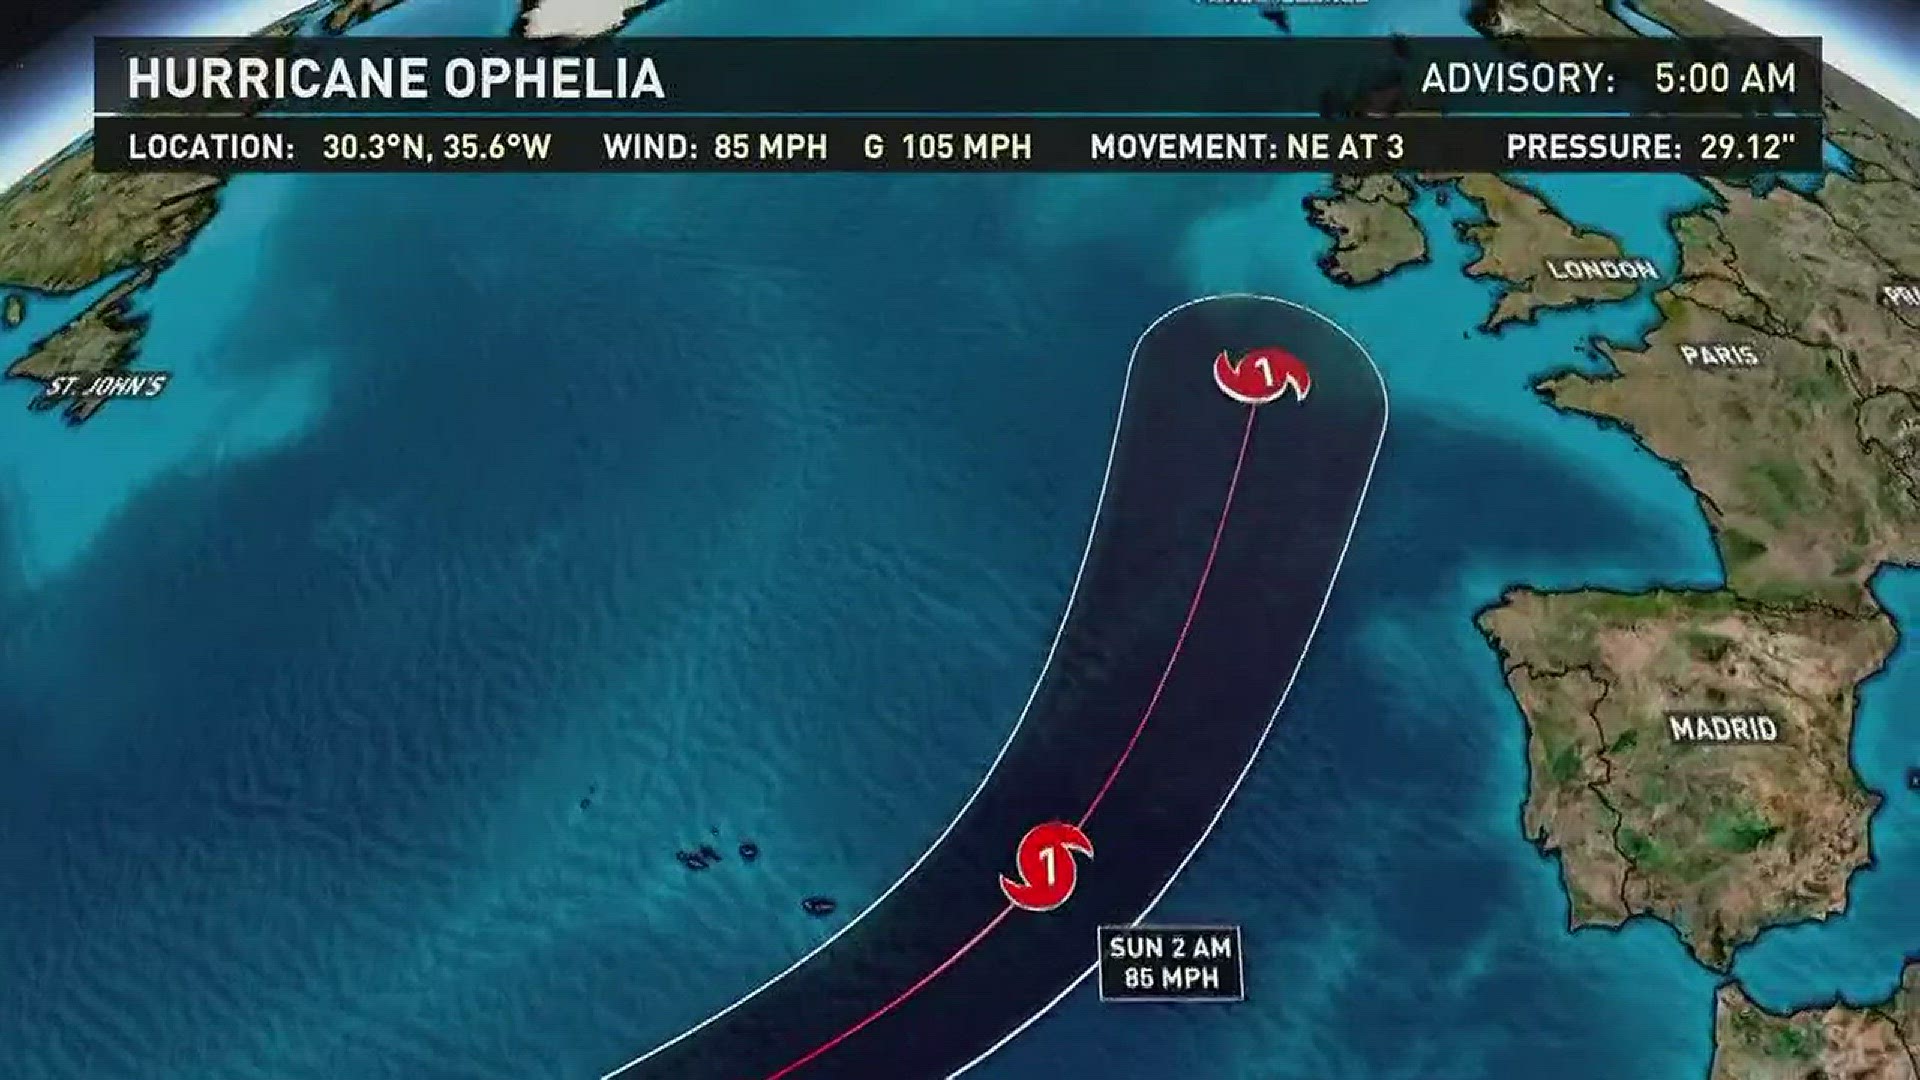 13News Now meteorologist Tim Pandajis on the latest with Hurricane Ophelia, as it heads toward Europe.